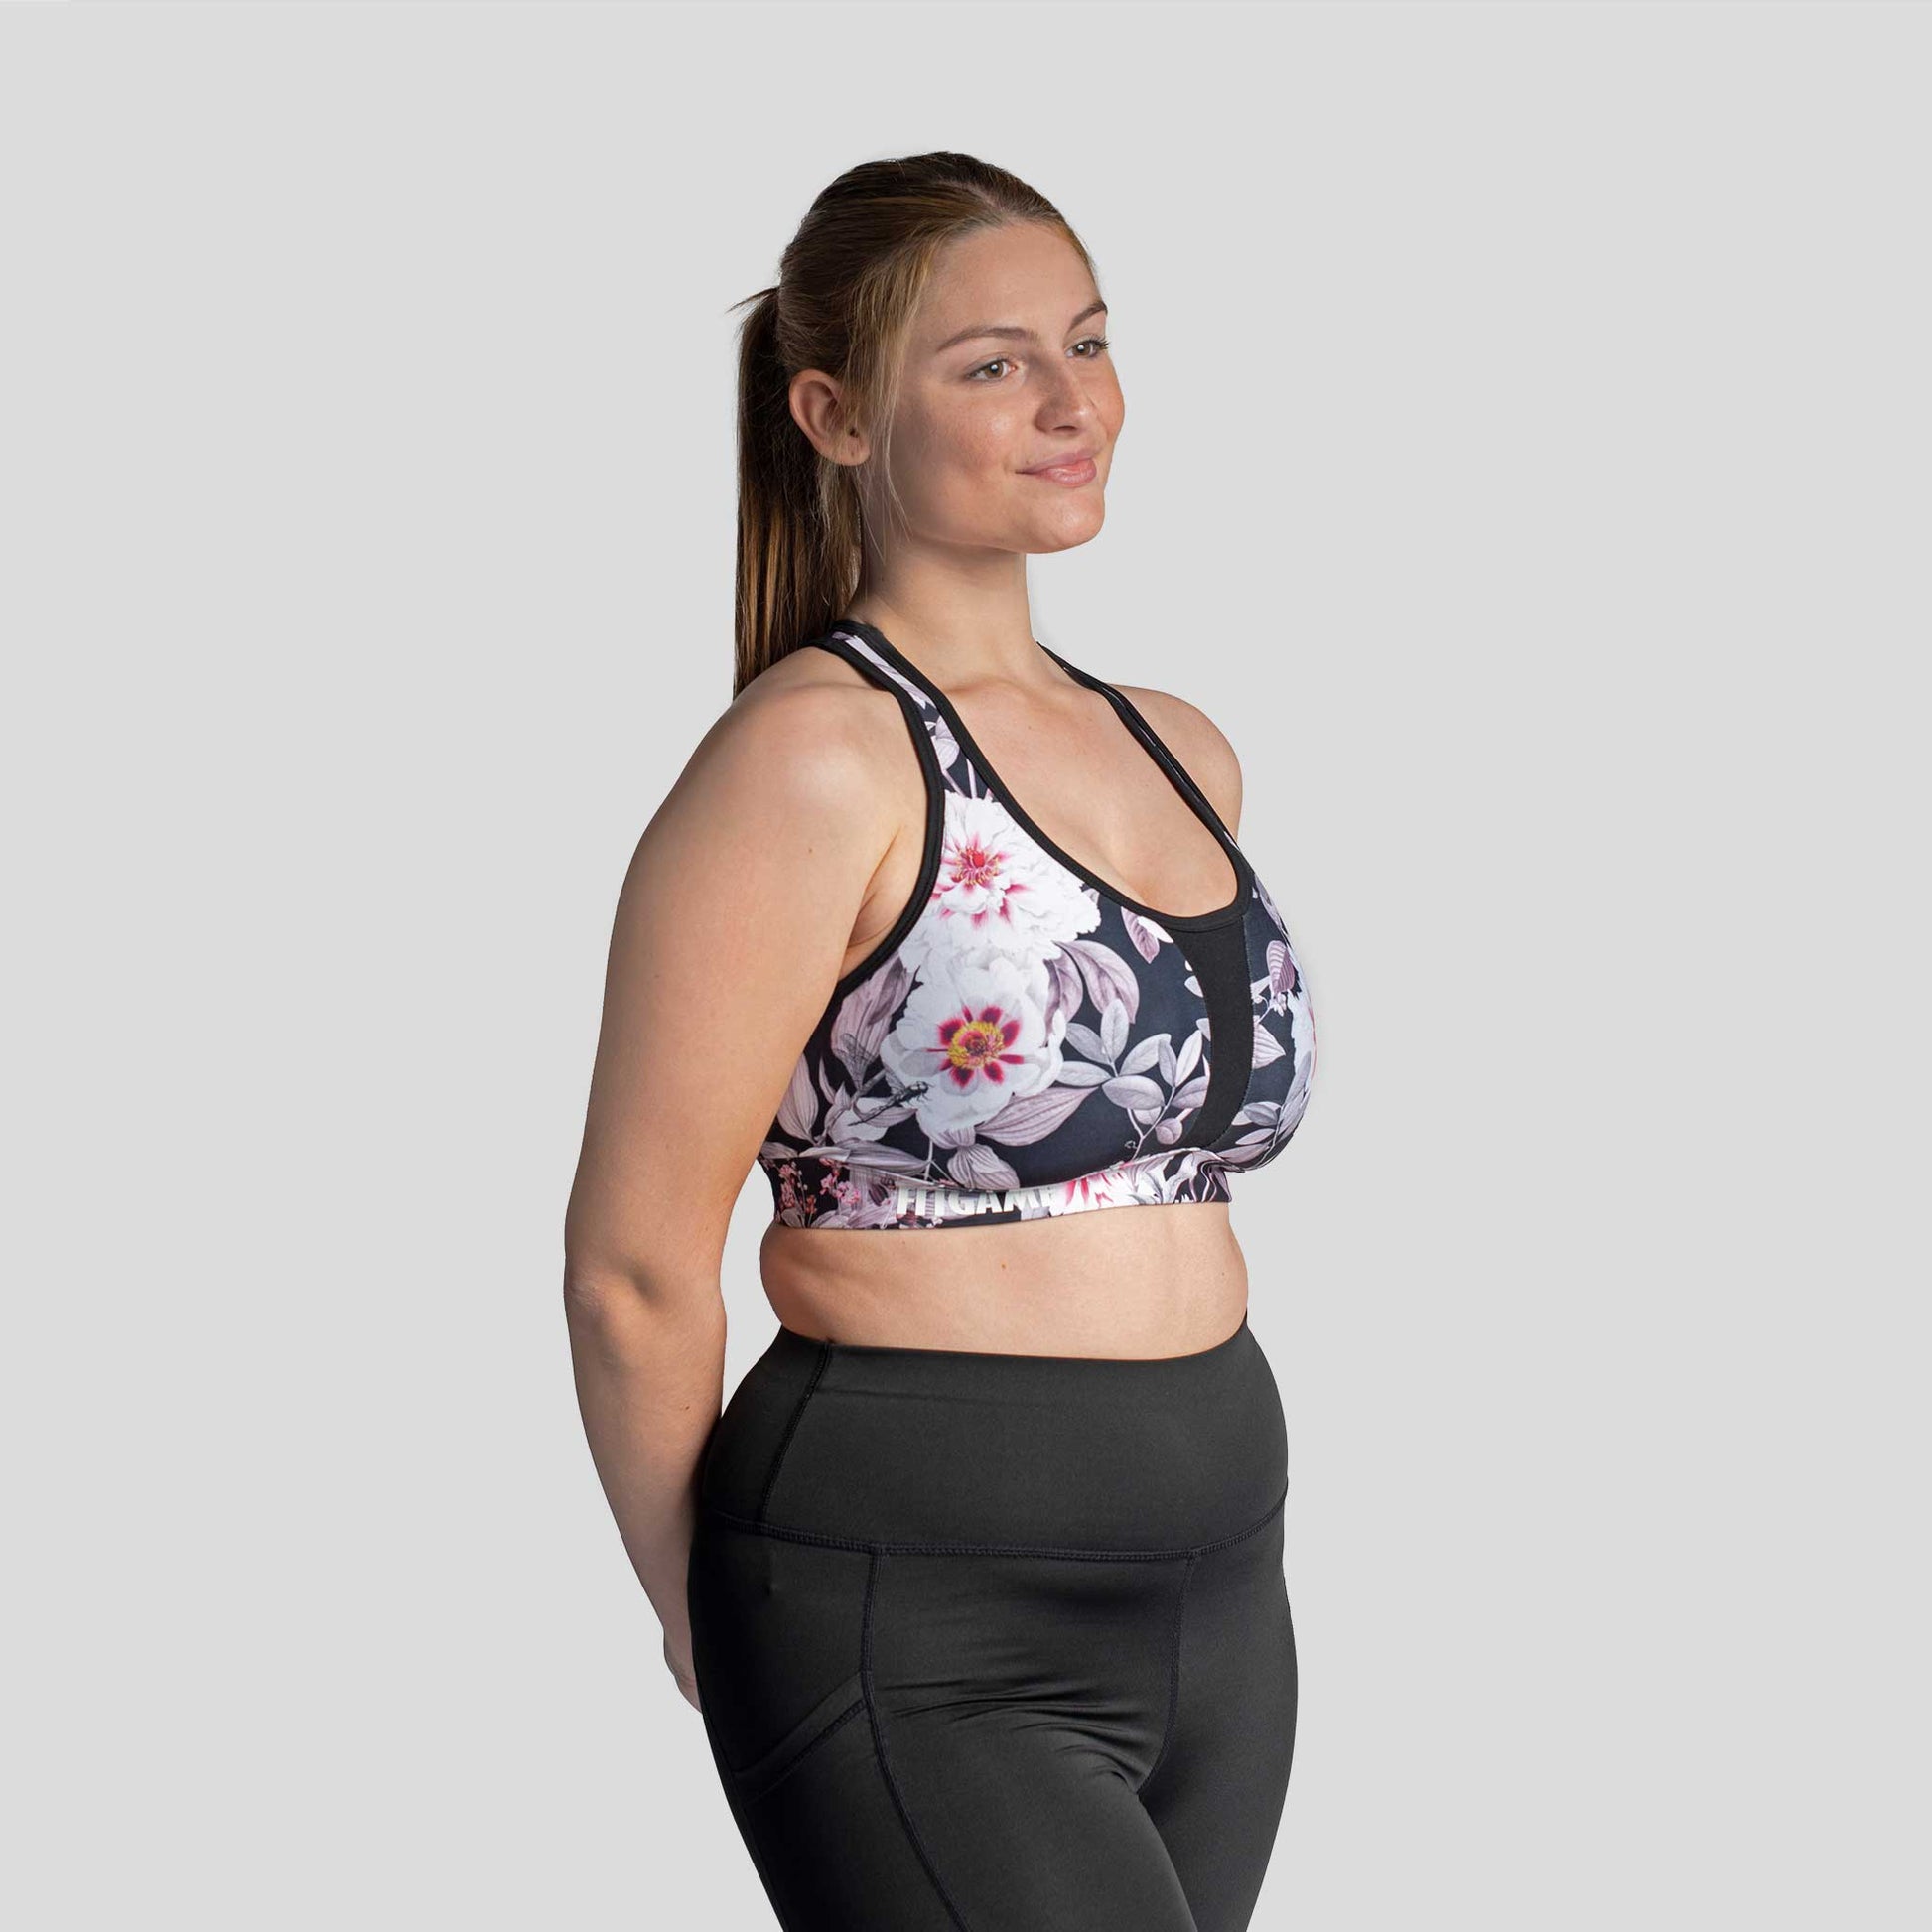 Stylish and Supportive Women's Sports Bra - Size XL